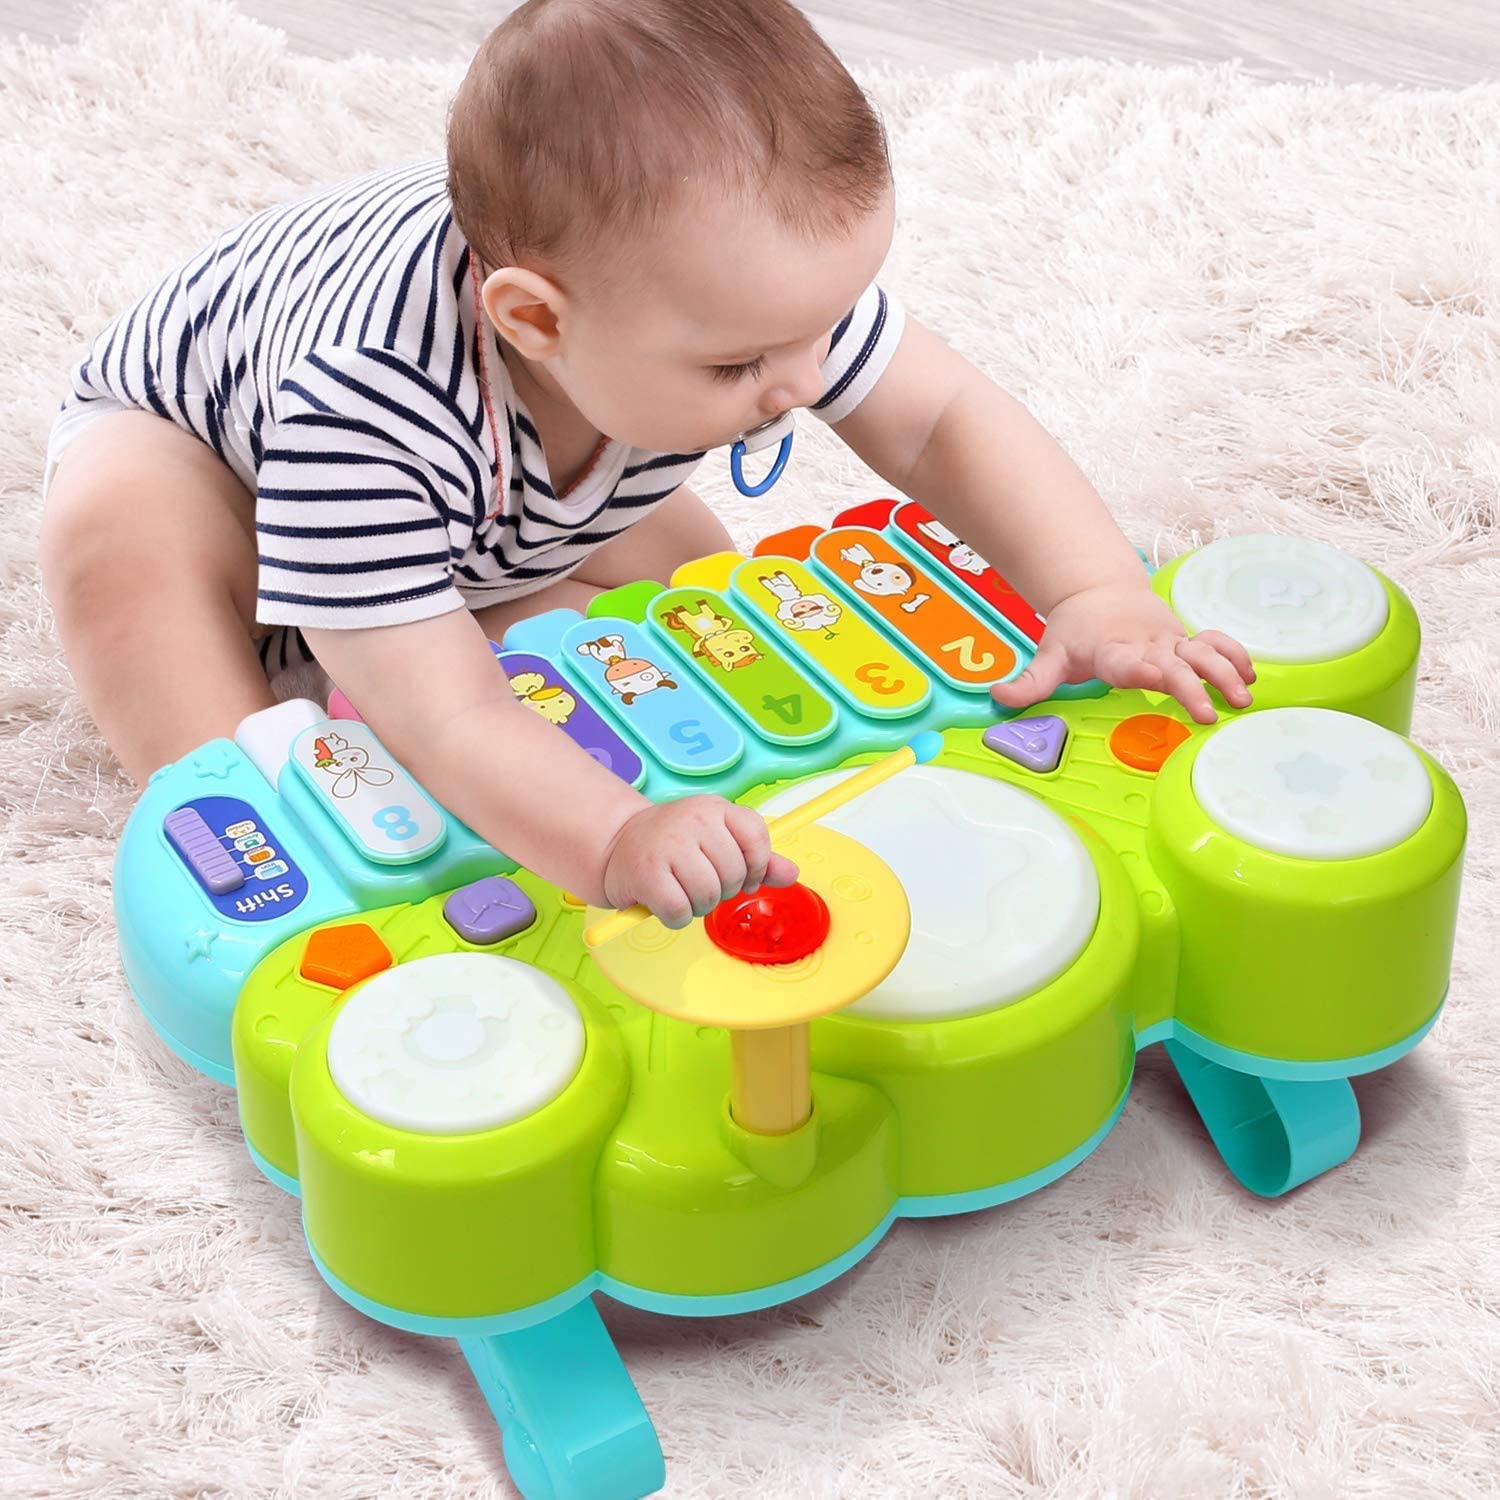 Ohuhu Electronic Xylophone & Drums Infant Boy Toy